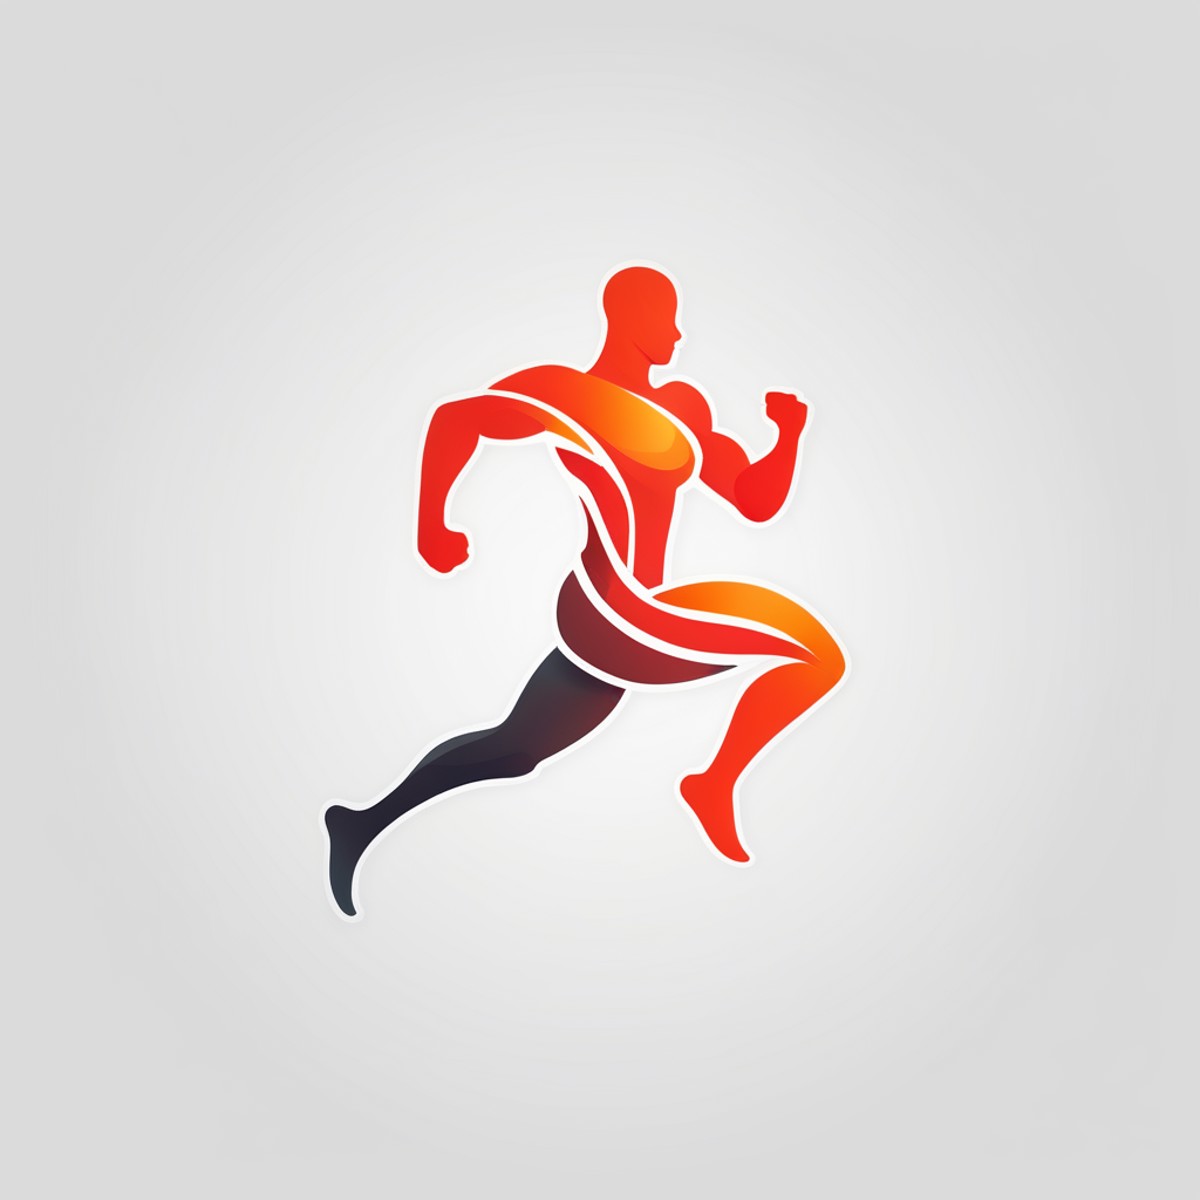 A logo for a fitness app, dynamic running figure, energetic colors (red, orange)., LogoRedAF, <lora:LogoRedmond_LogoRedAF:1>